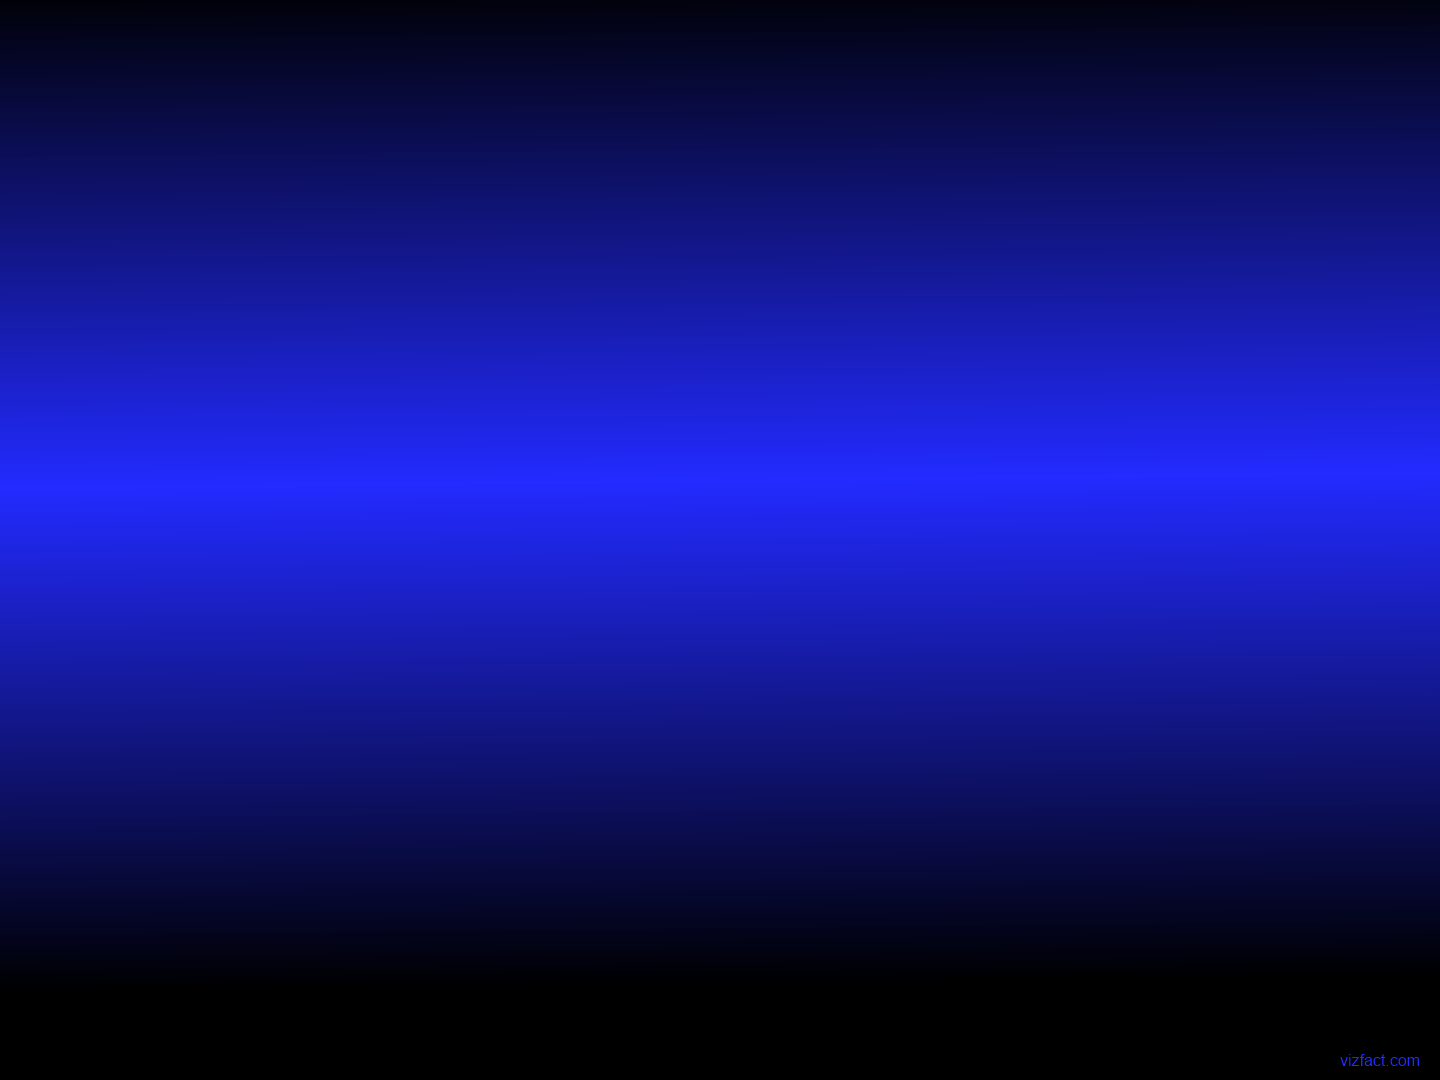 background wallpaper blue black gradient vizfact dot com blue black